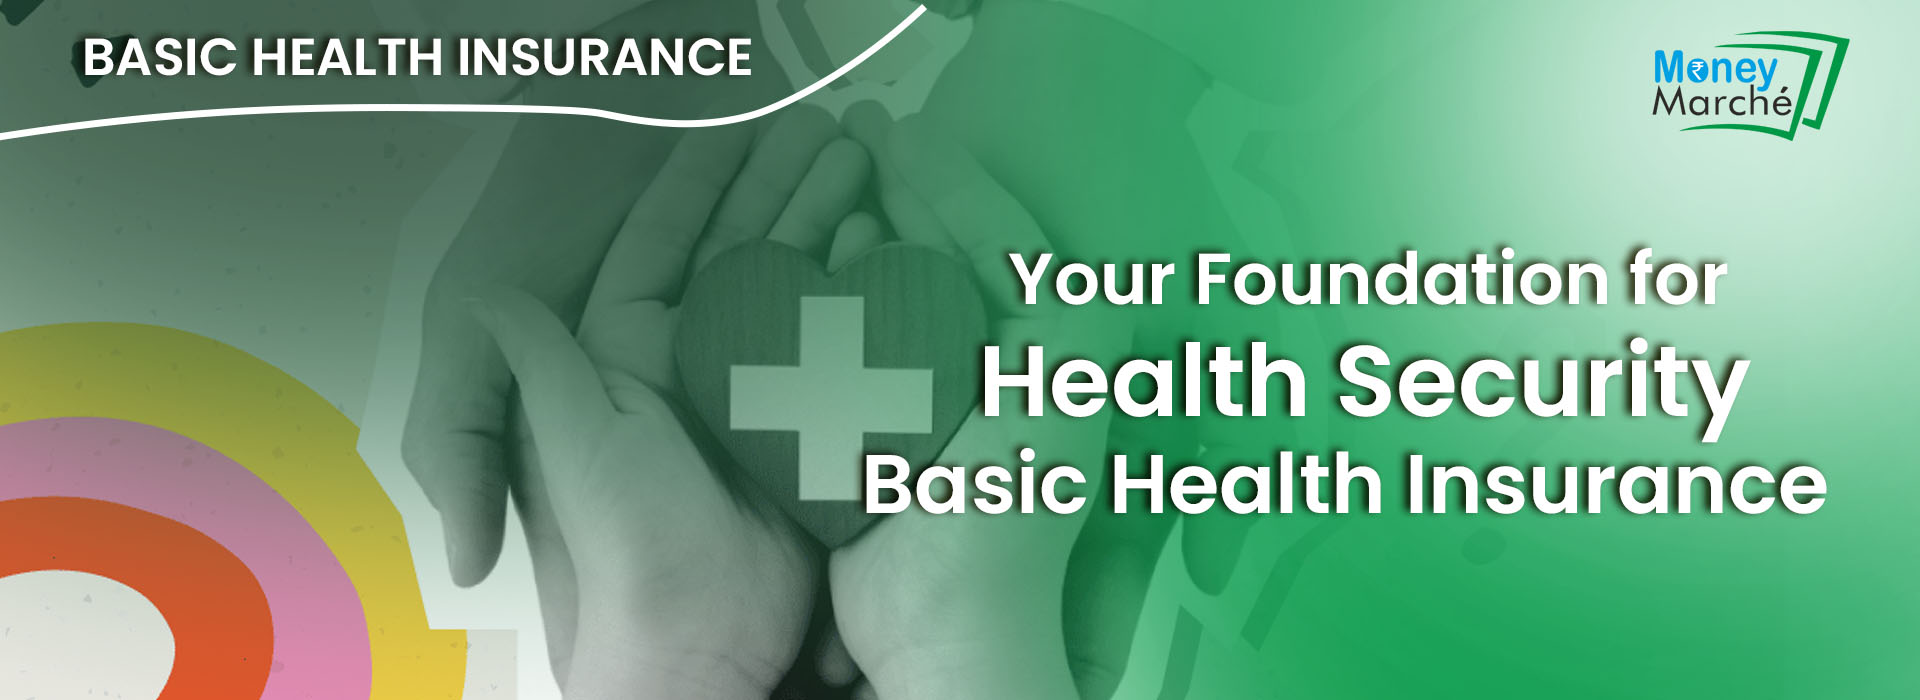 Basic Health Insurance